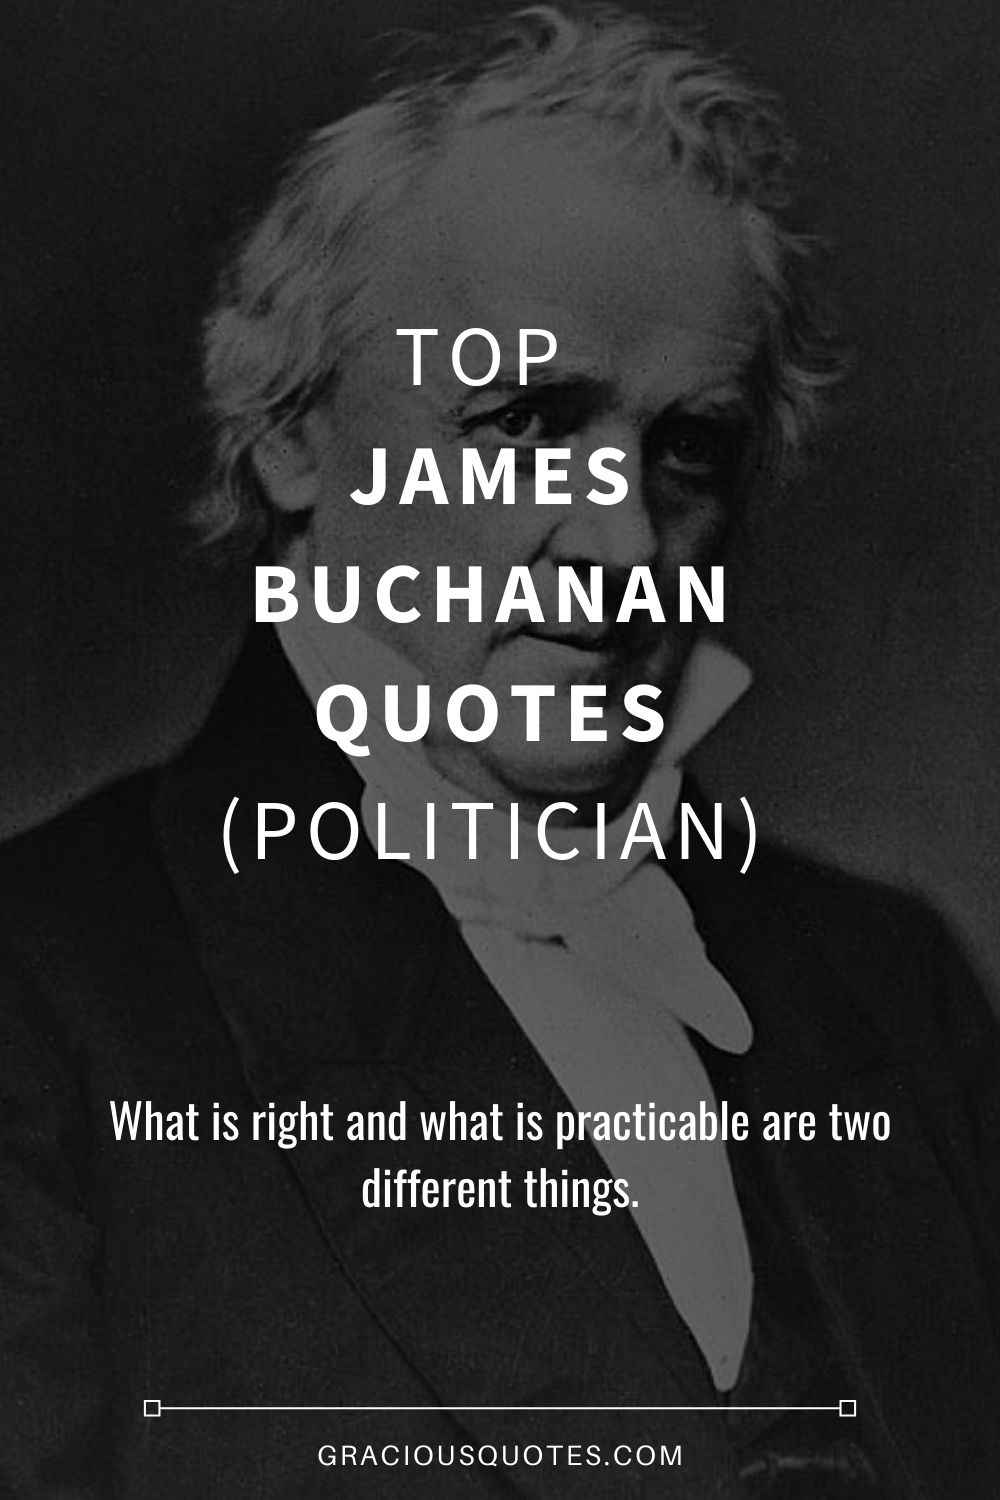 Top James Buchanan Quotes (POLITICIAN) - Gracious Quotes